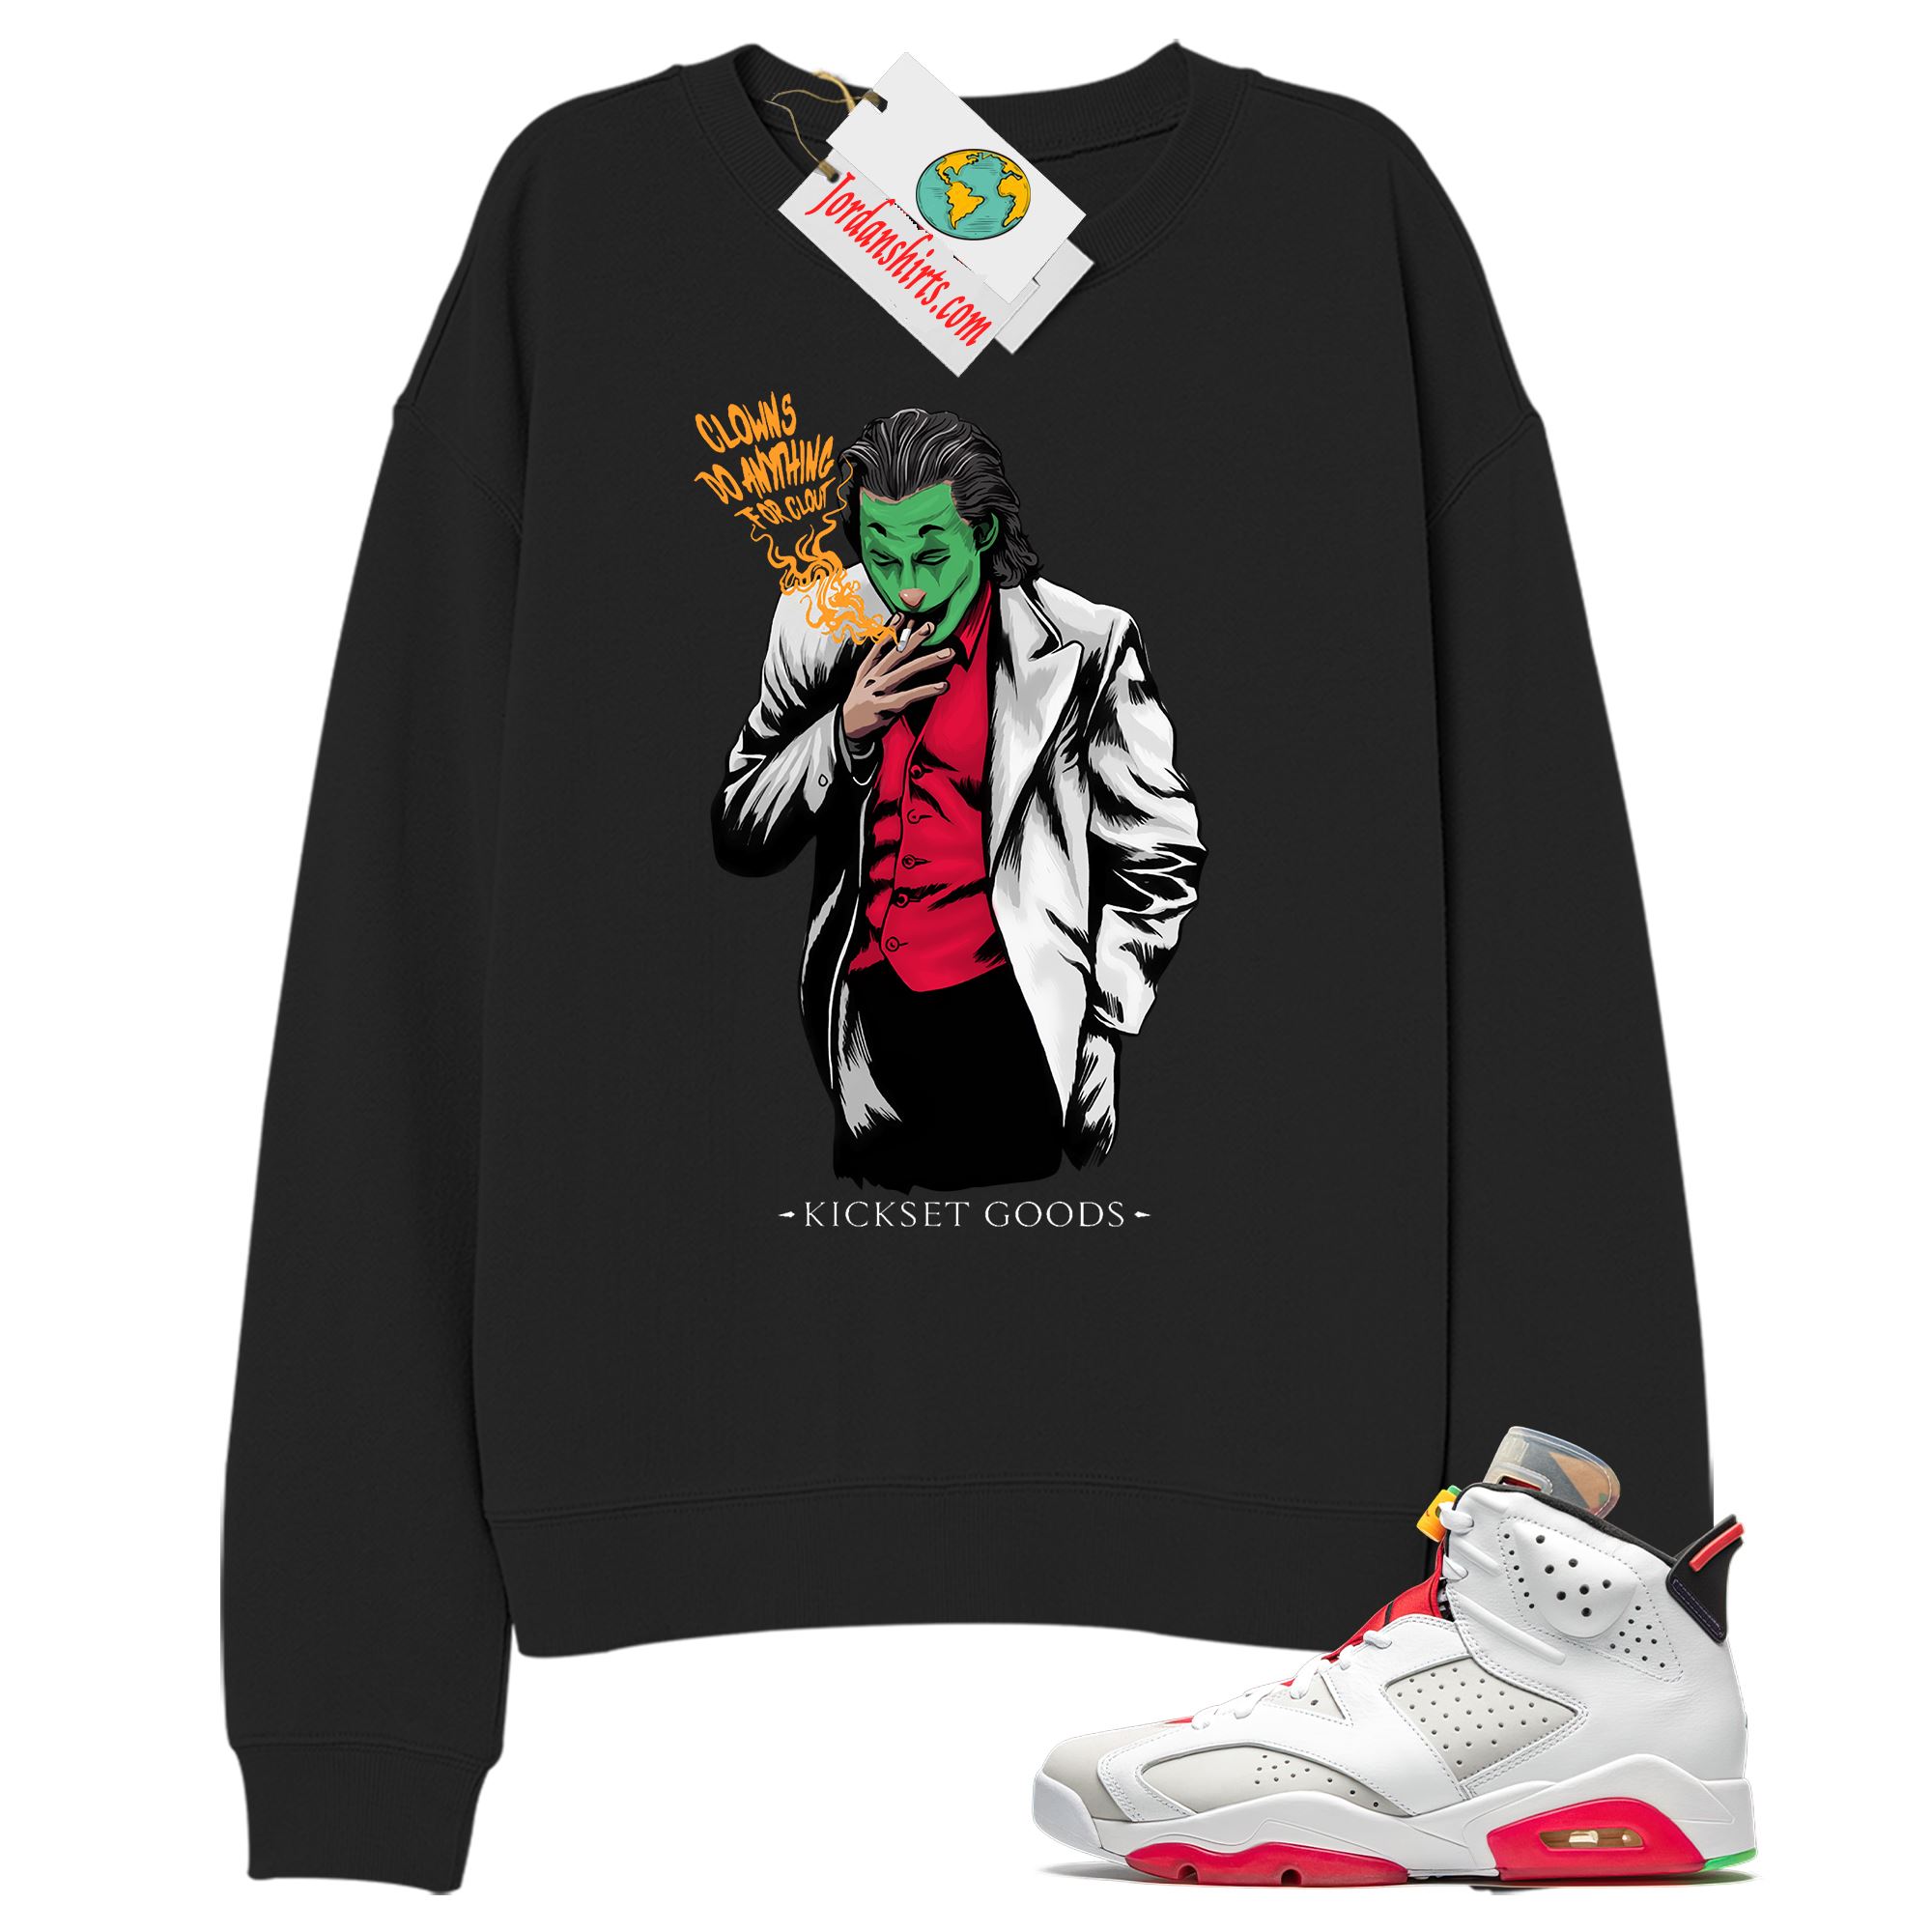 Jordan 6 Sweatshirt, Joker Black Sweatshirt Air Jordan 6 Hare 6s Size Up To 5xl